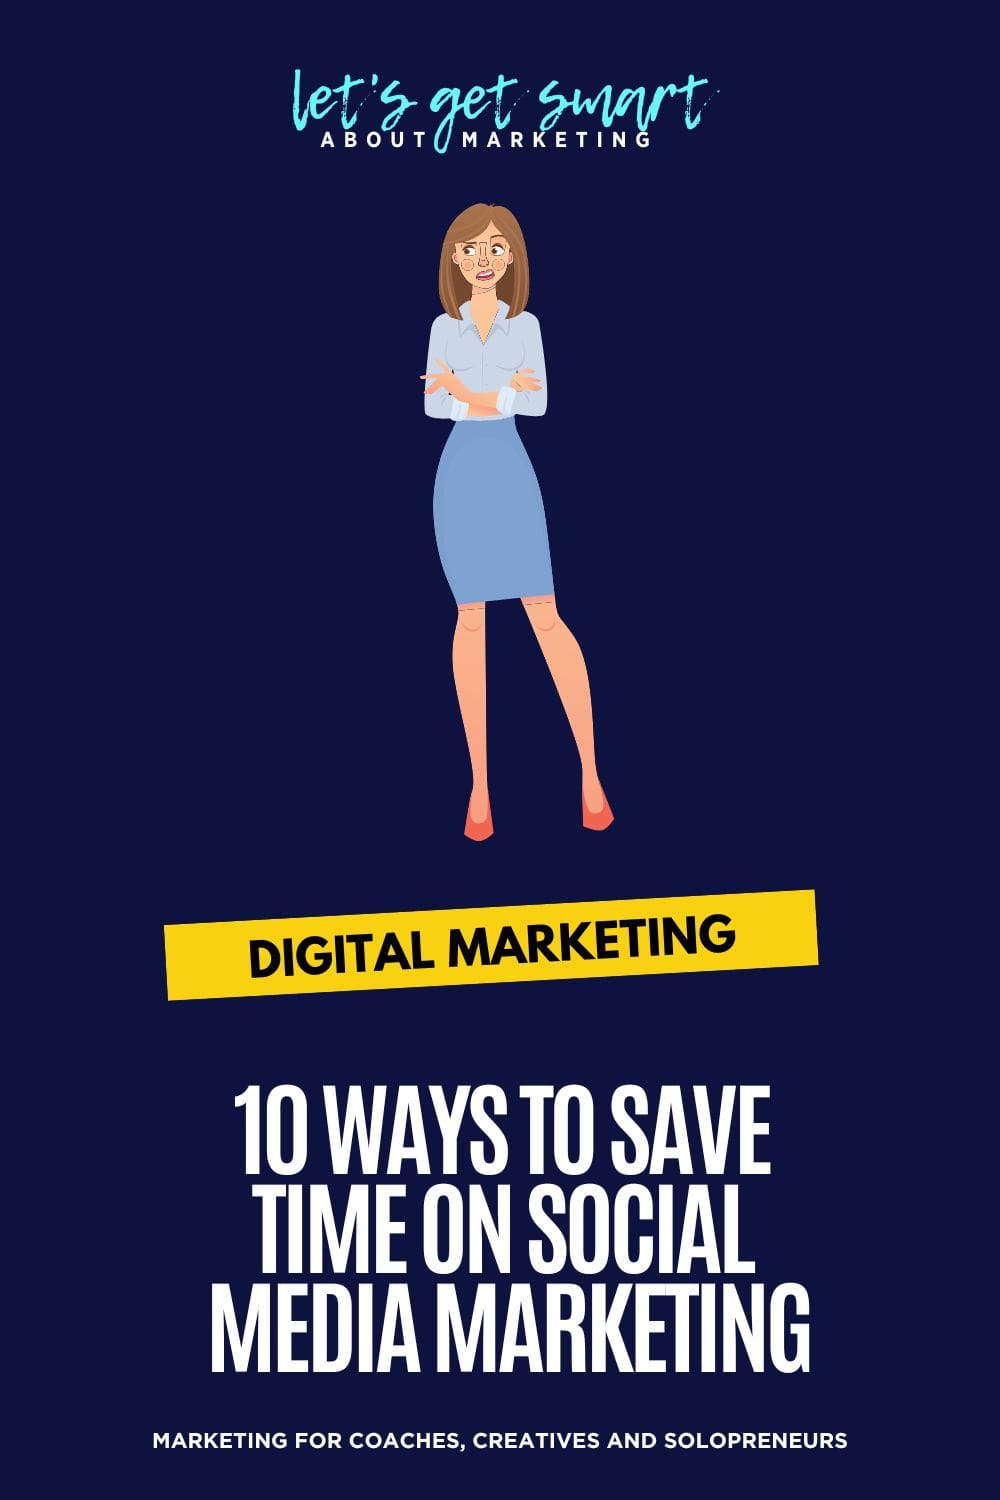 Time Saving Social Media Marketing Tips